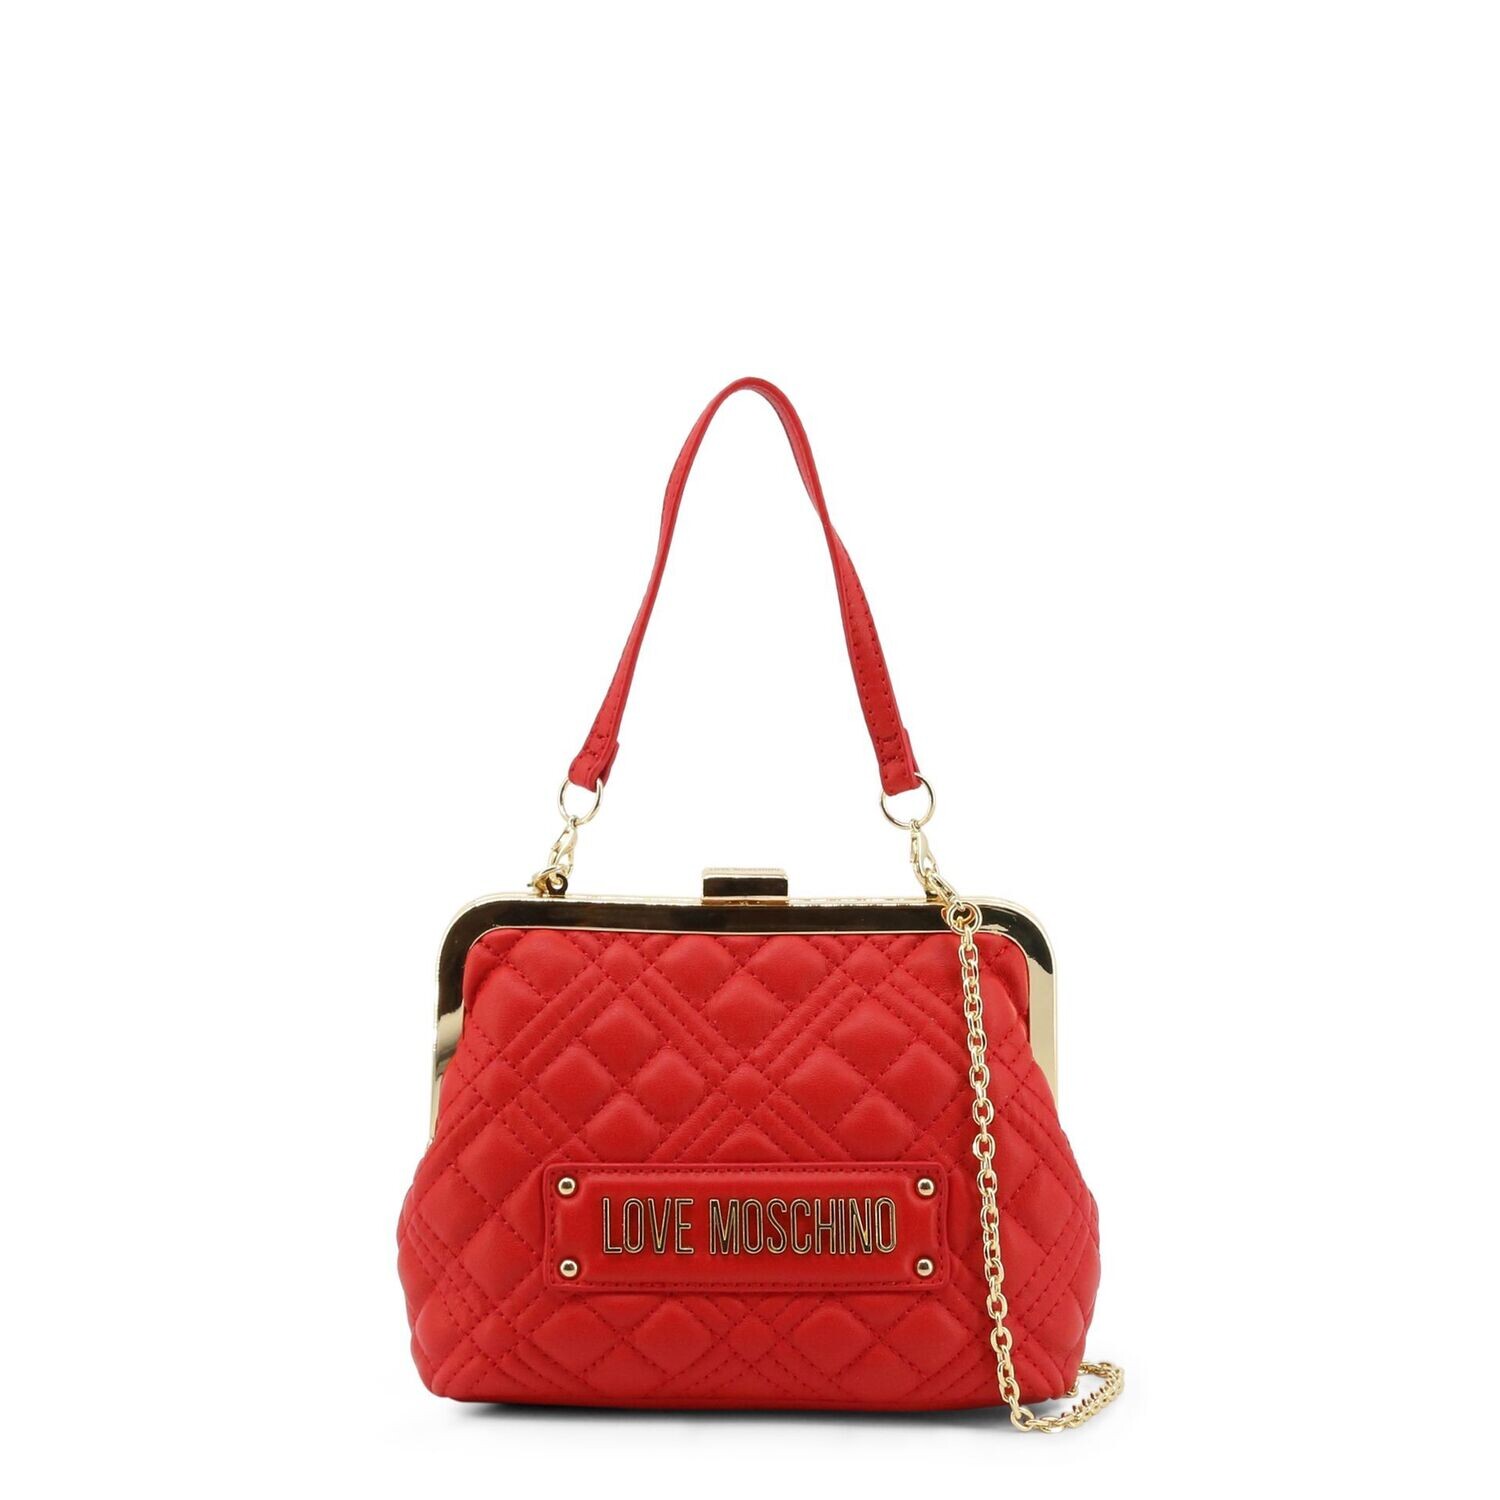 Love Moschino Fire Red Clutch Bag